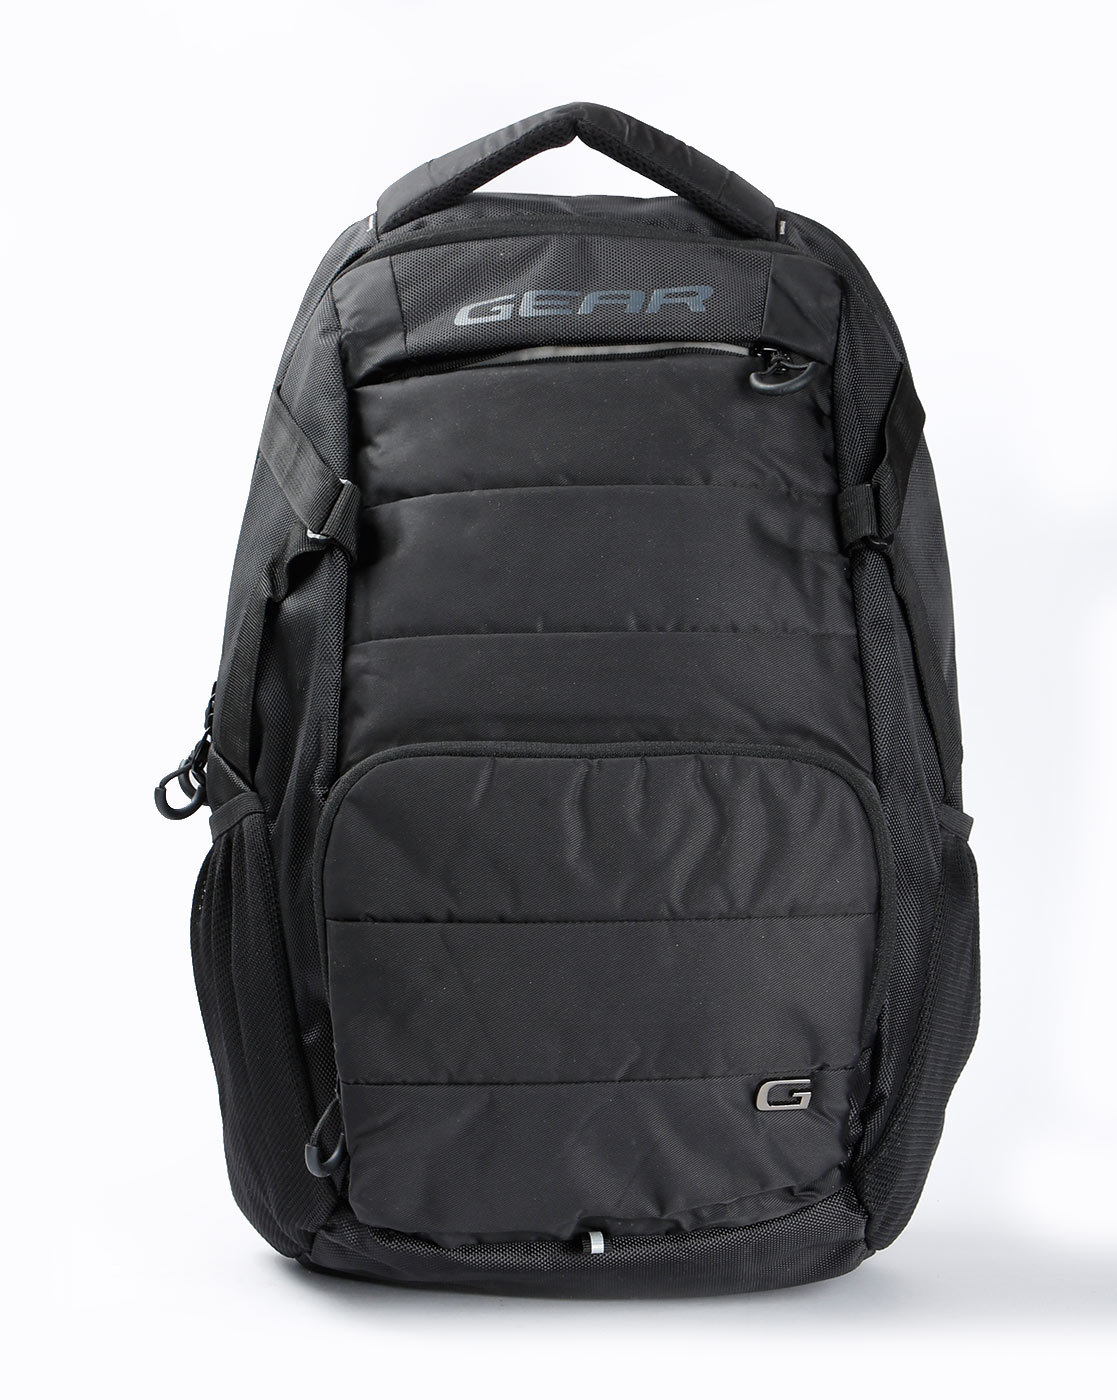 Buy F Gear Shigo 24 Ltrs Lavender Medium Backpack at Best Price @ Tata CLiQ